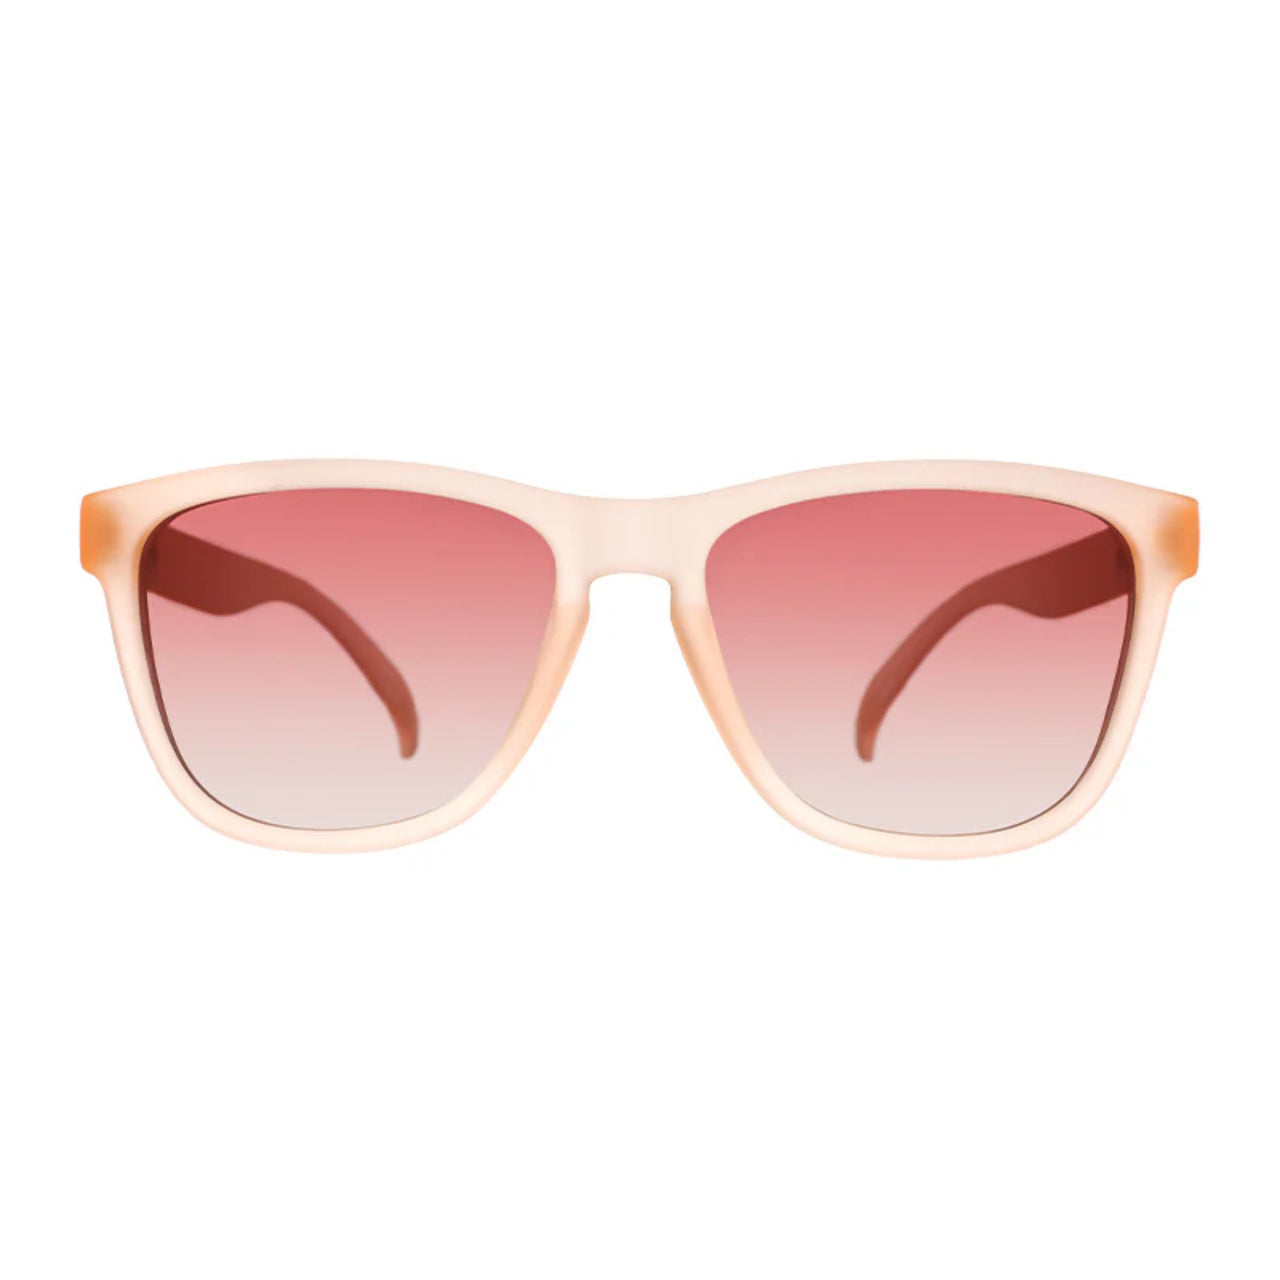 OG Sunglasses | Don't Make Me Blush